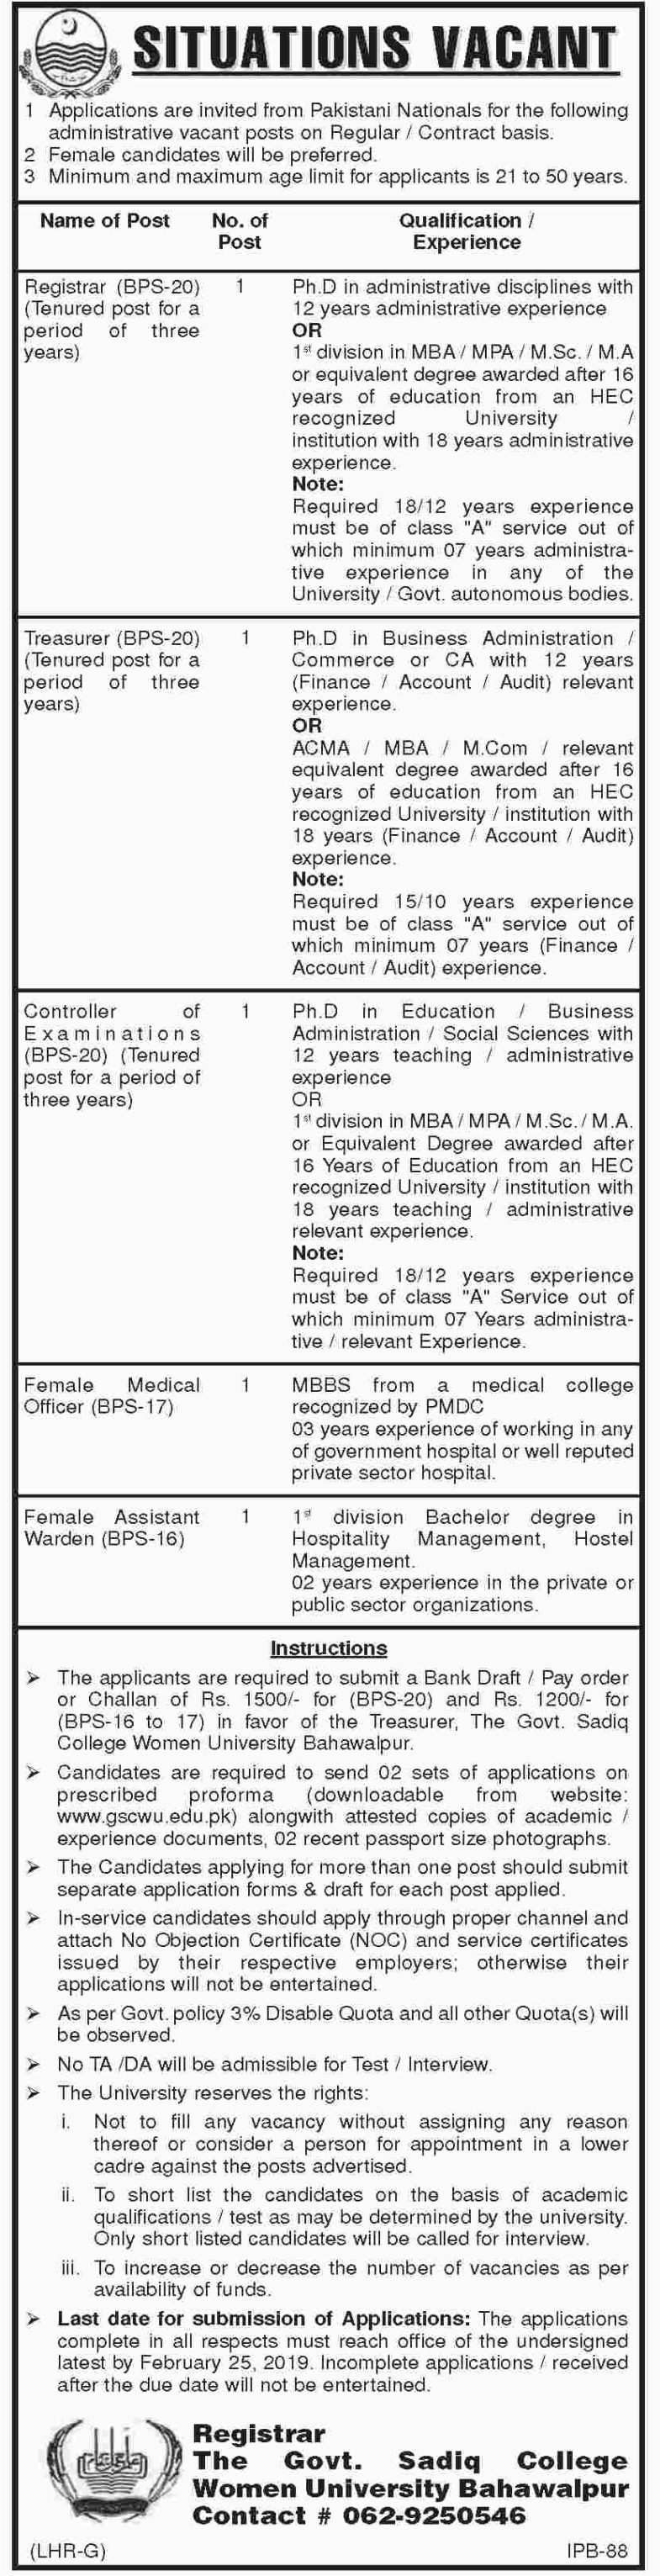 Govt Sadiq College Women University (Bahawalpur) Jobs 2019 for Registrar, Treasurer, Controller Examination, Medical Officer & Assistant Warden